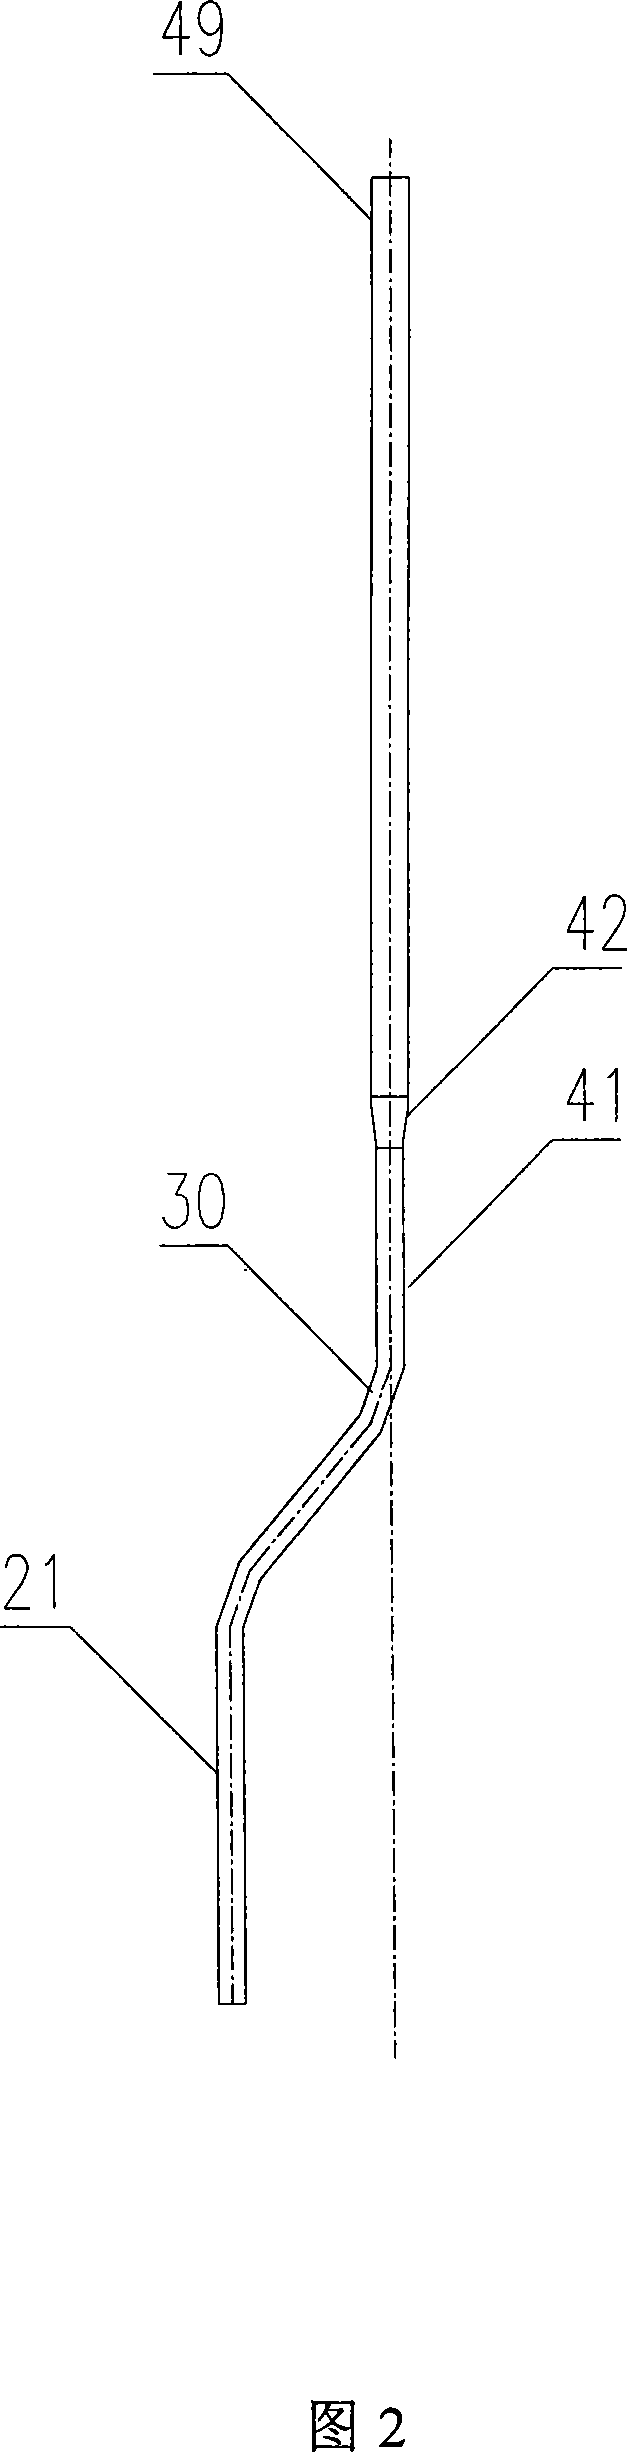 Novel configured single-stroke furnace tube ethylene cracking furnace